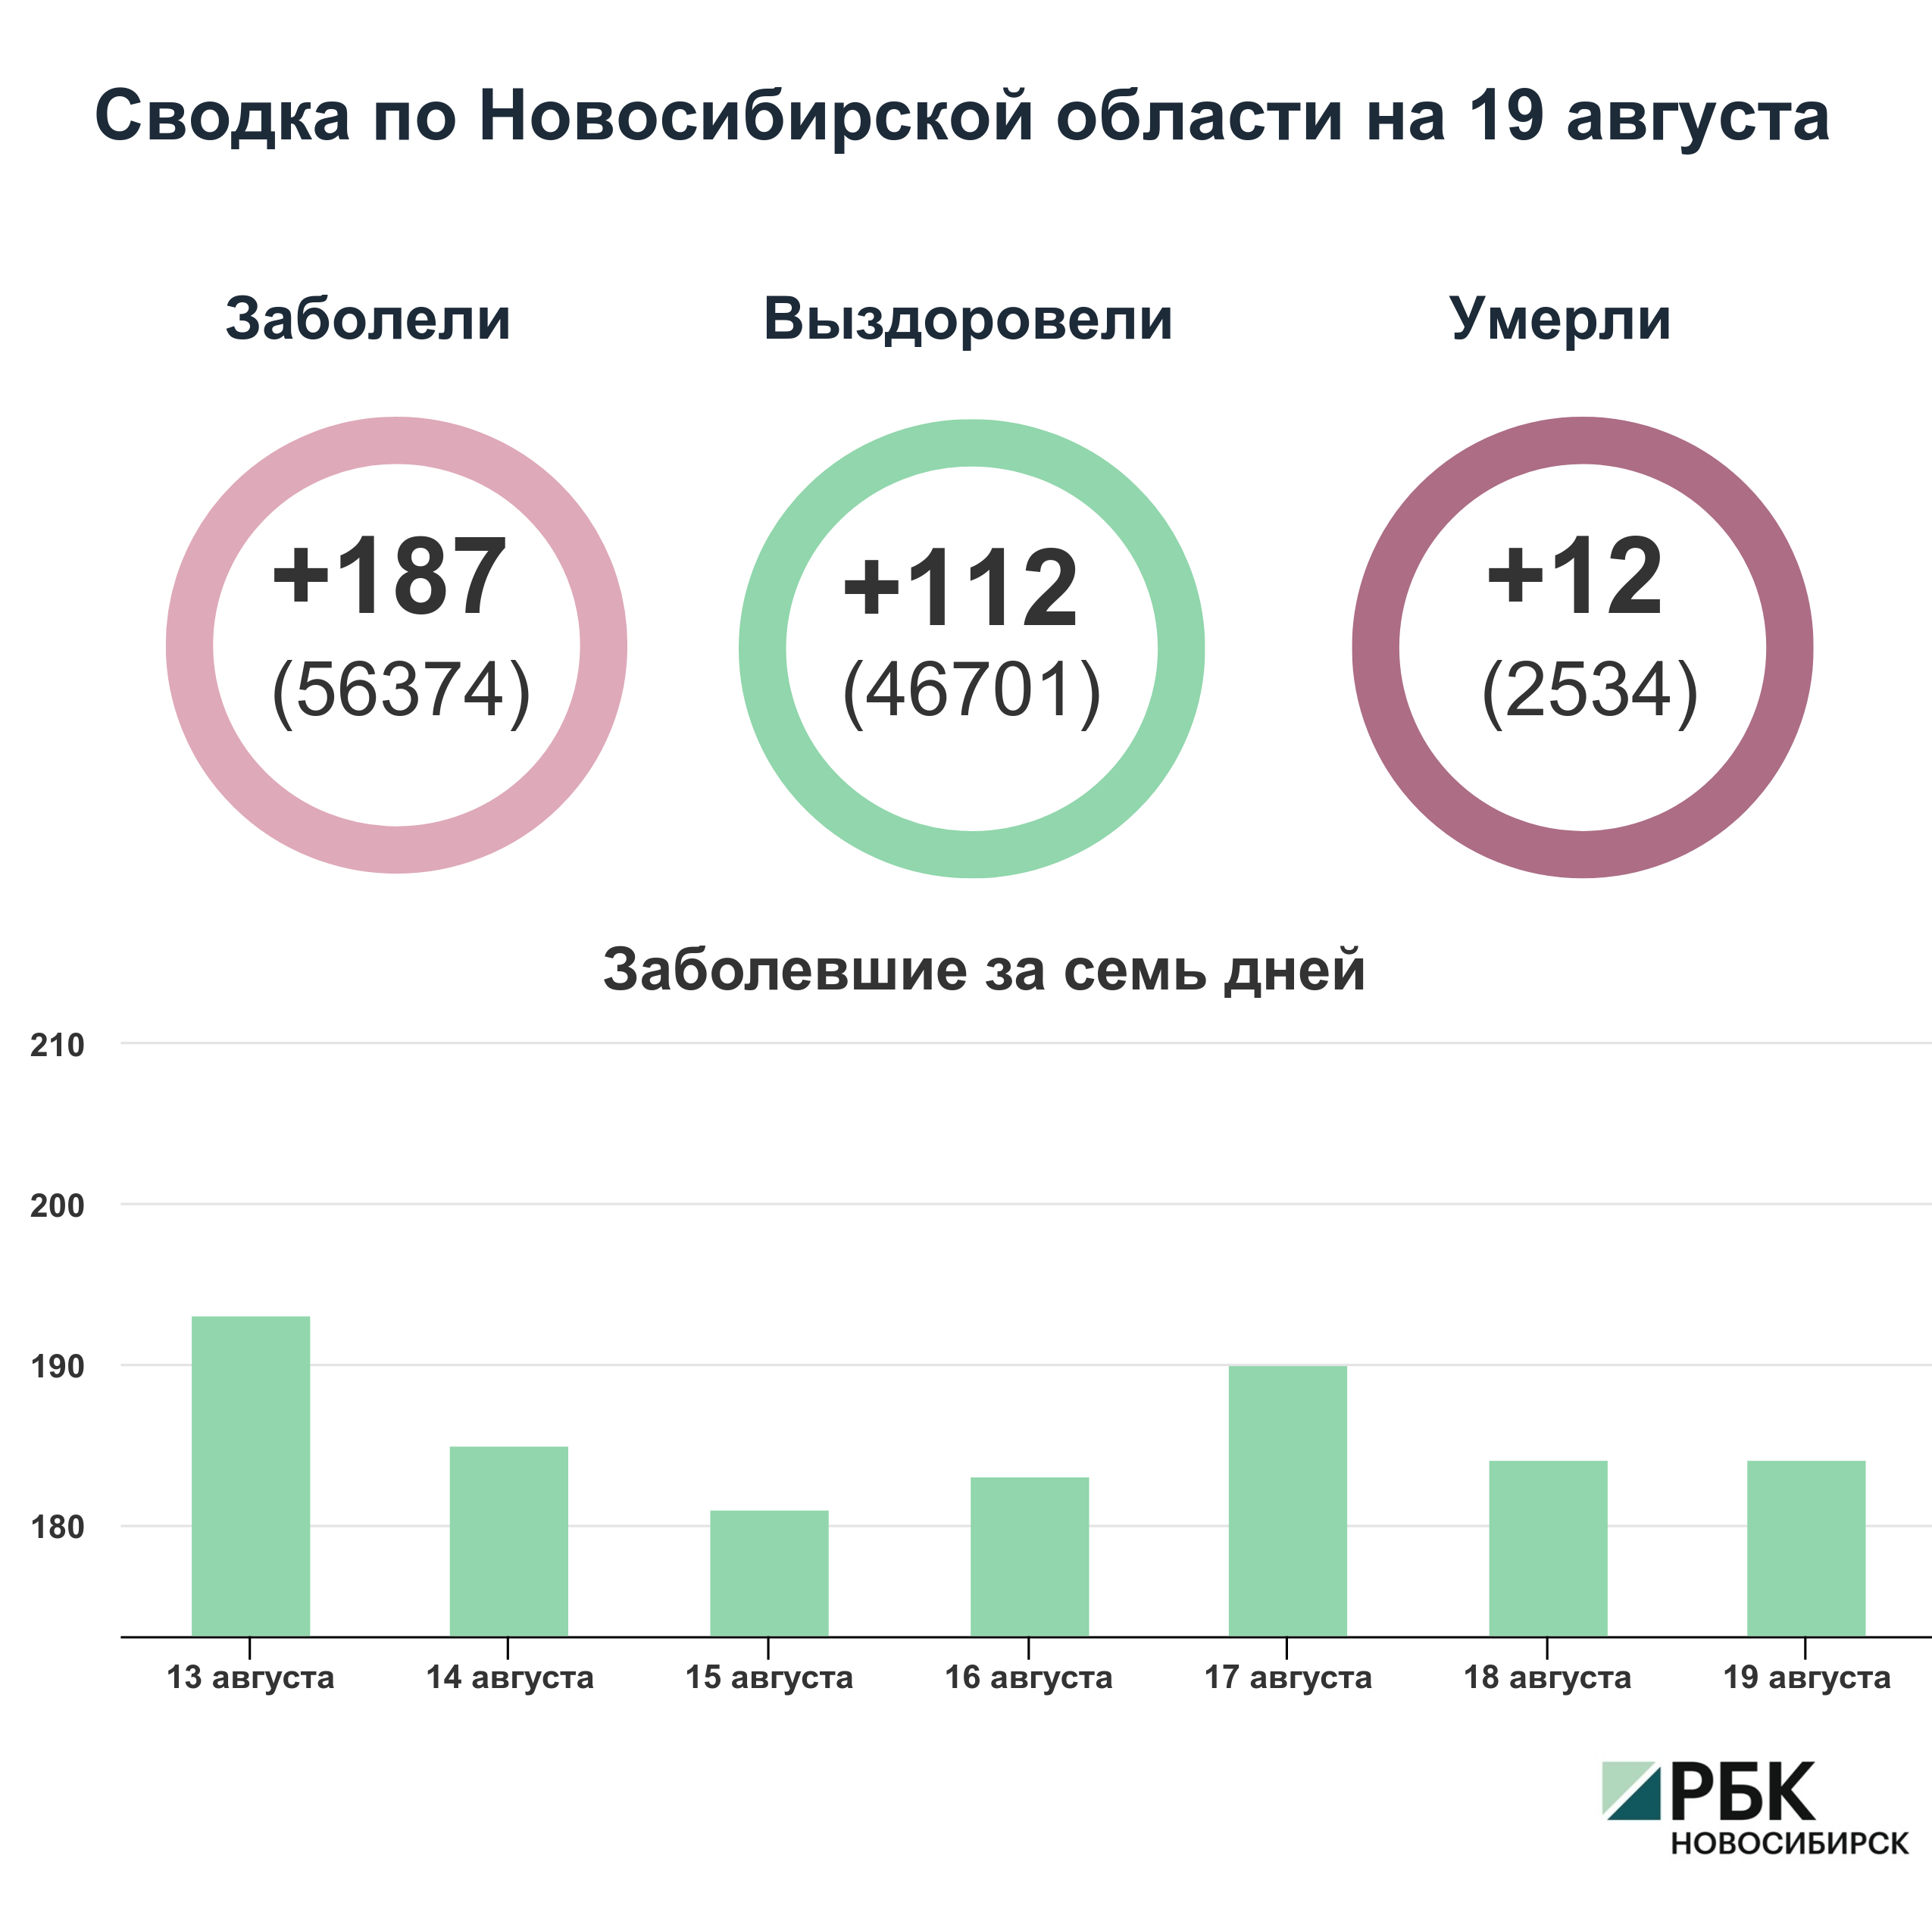 Коронавирус в Новосибирске: сводка на 19 августа